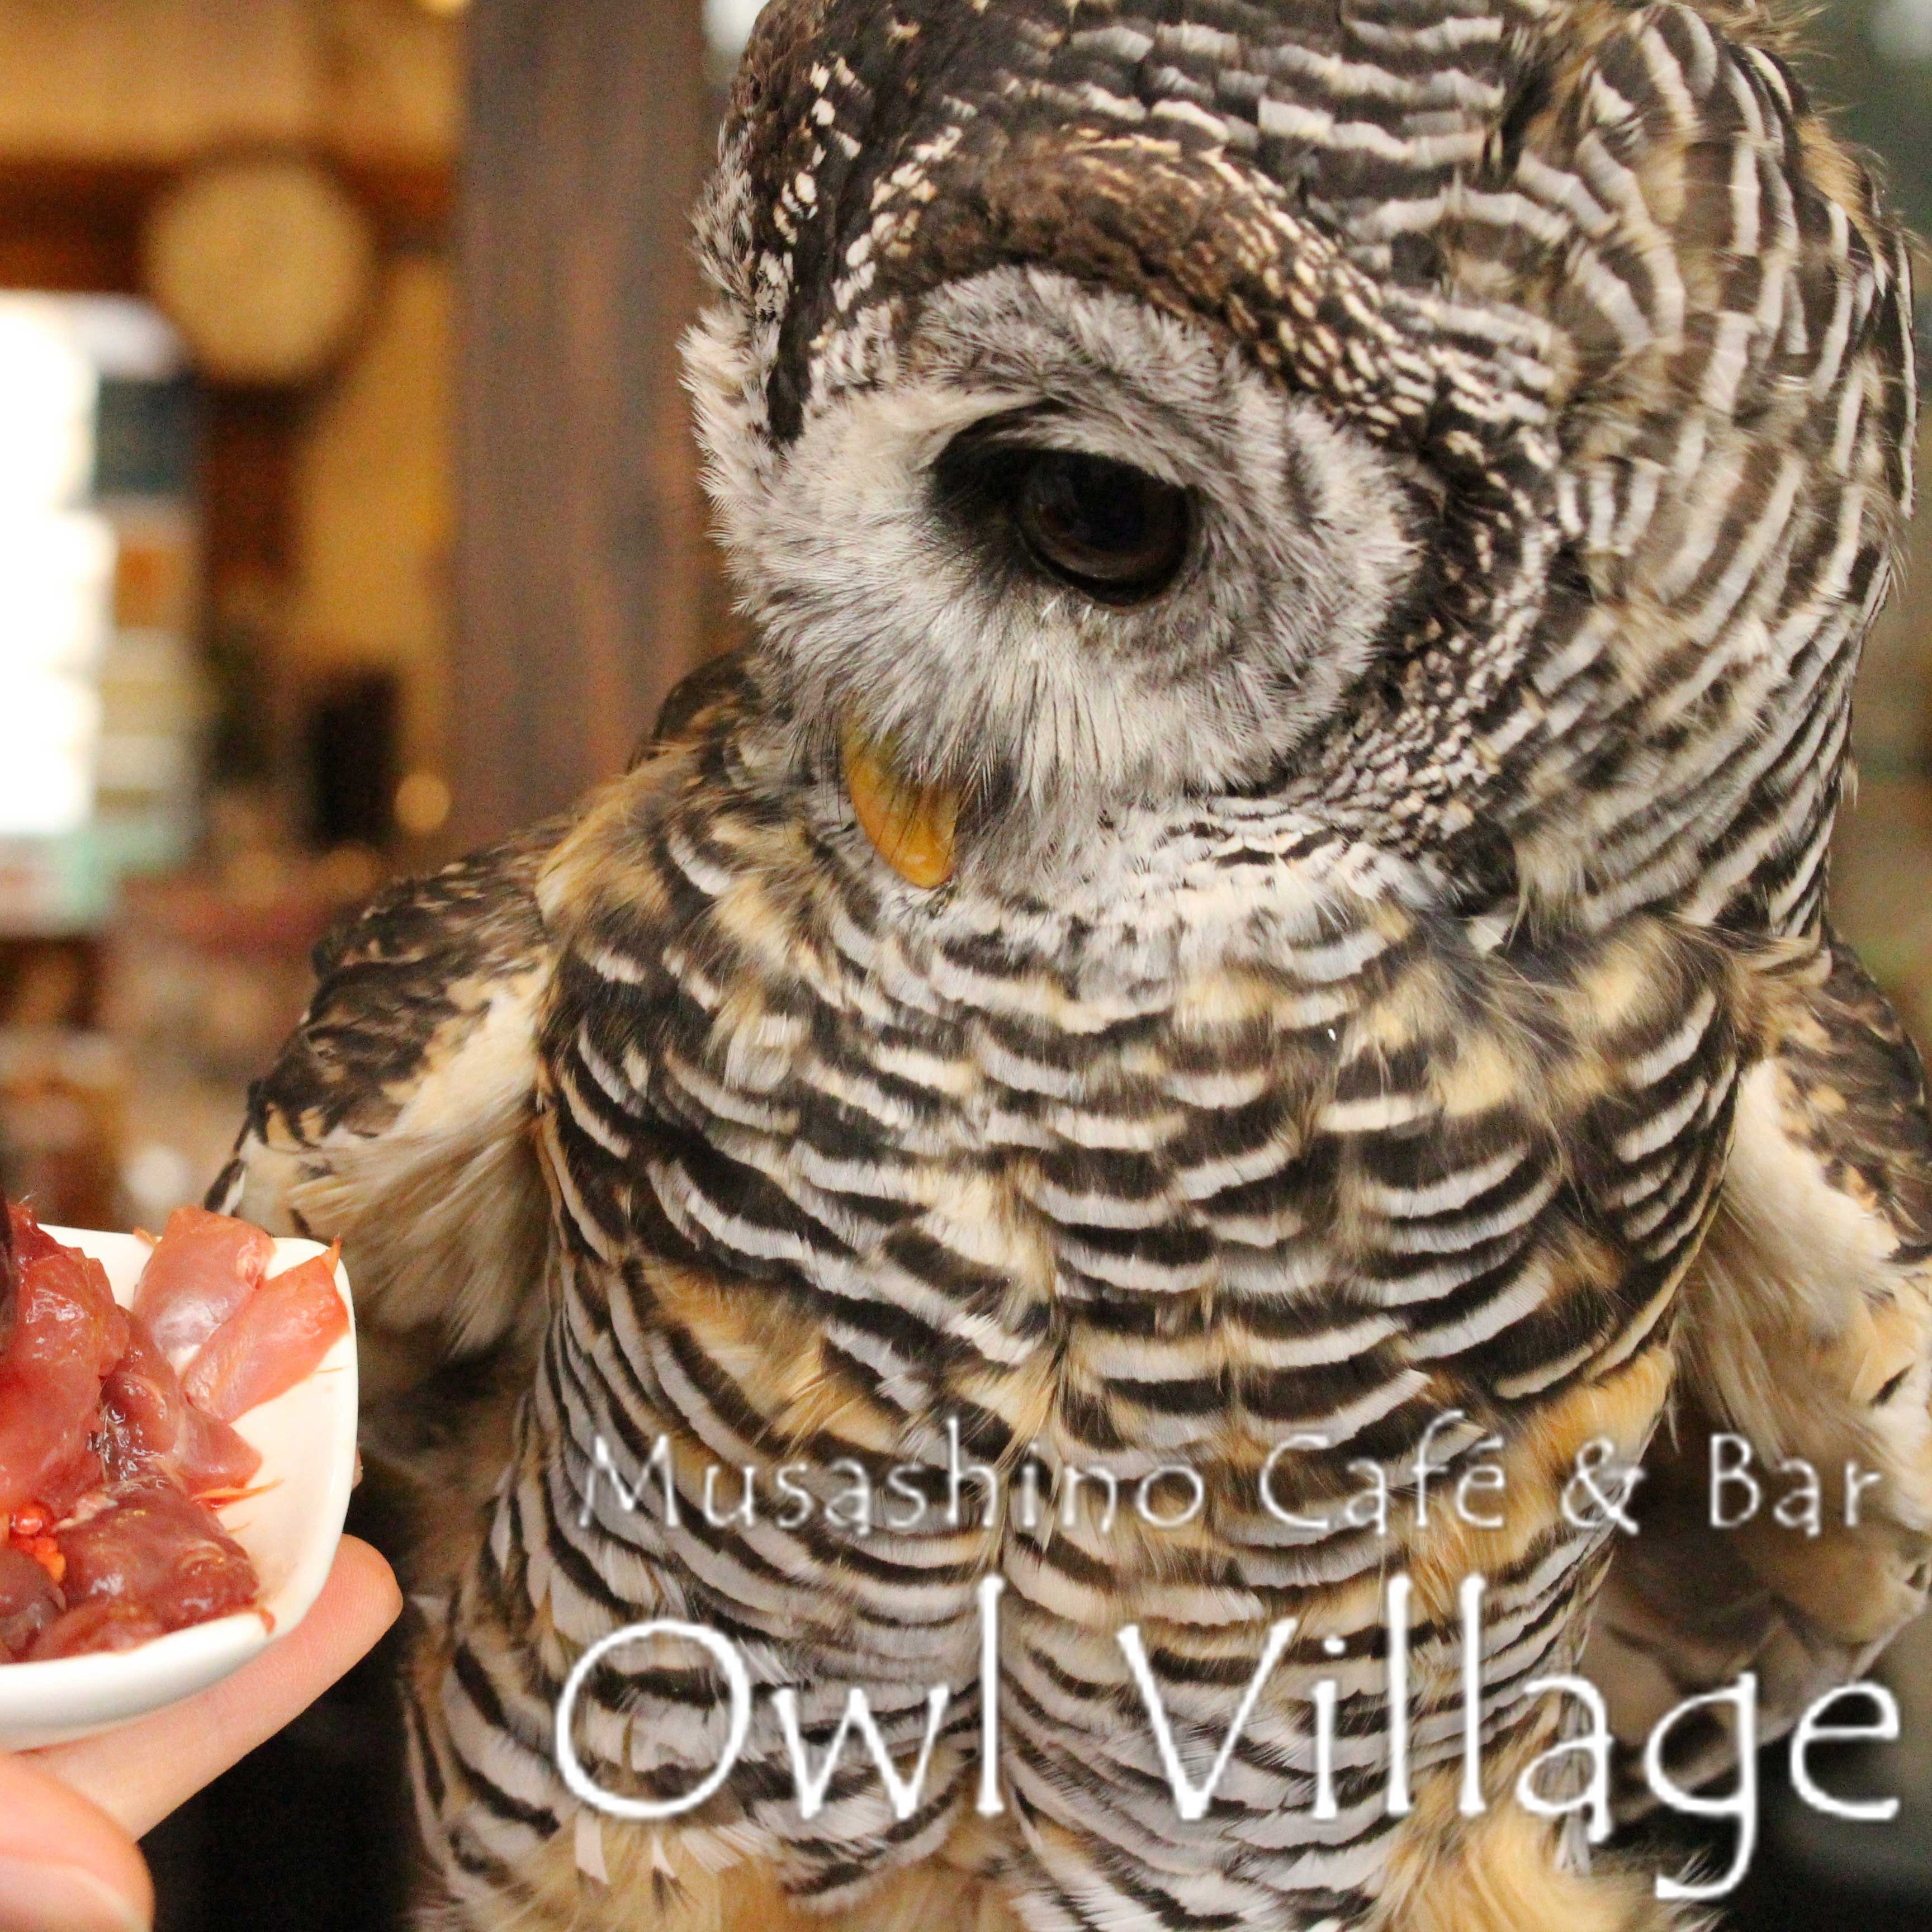 owl cafe harajuku down load free photo 0229  Chaco Owl